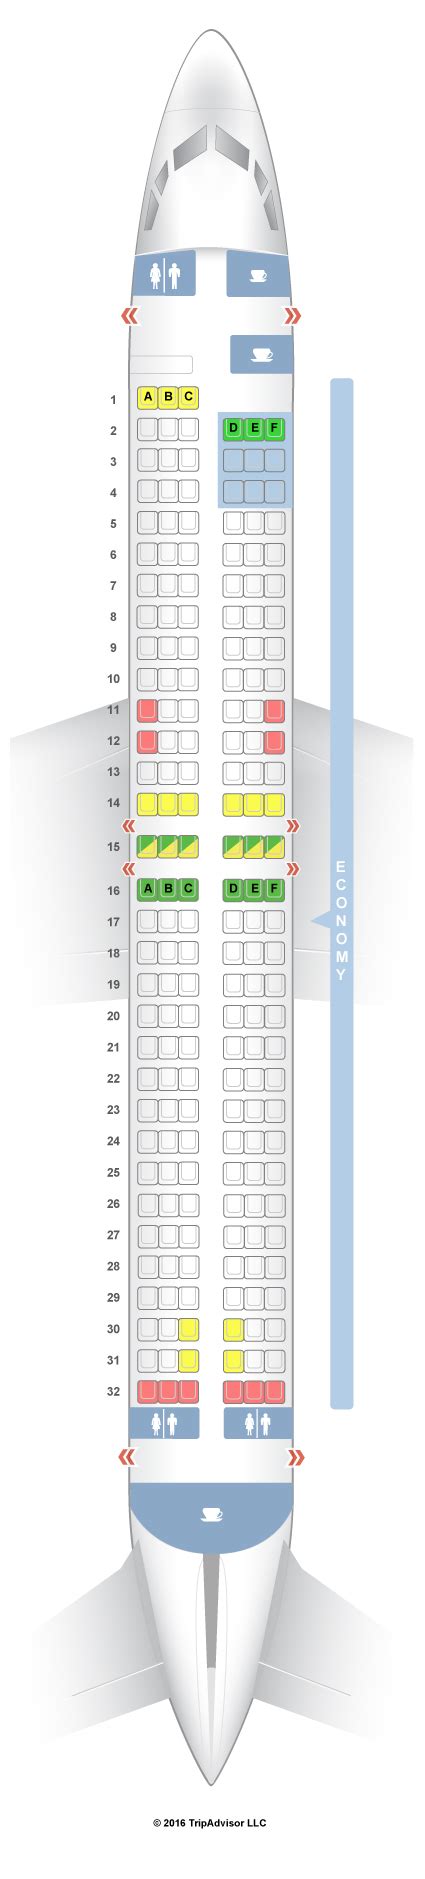 Seatguru Seat Map Tuifly Boeing 737 800 73h